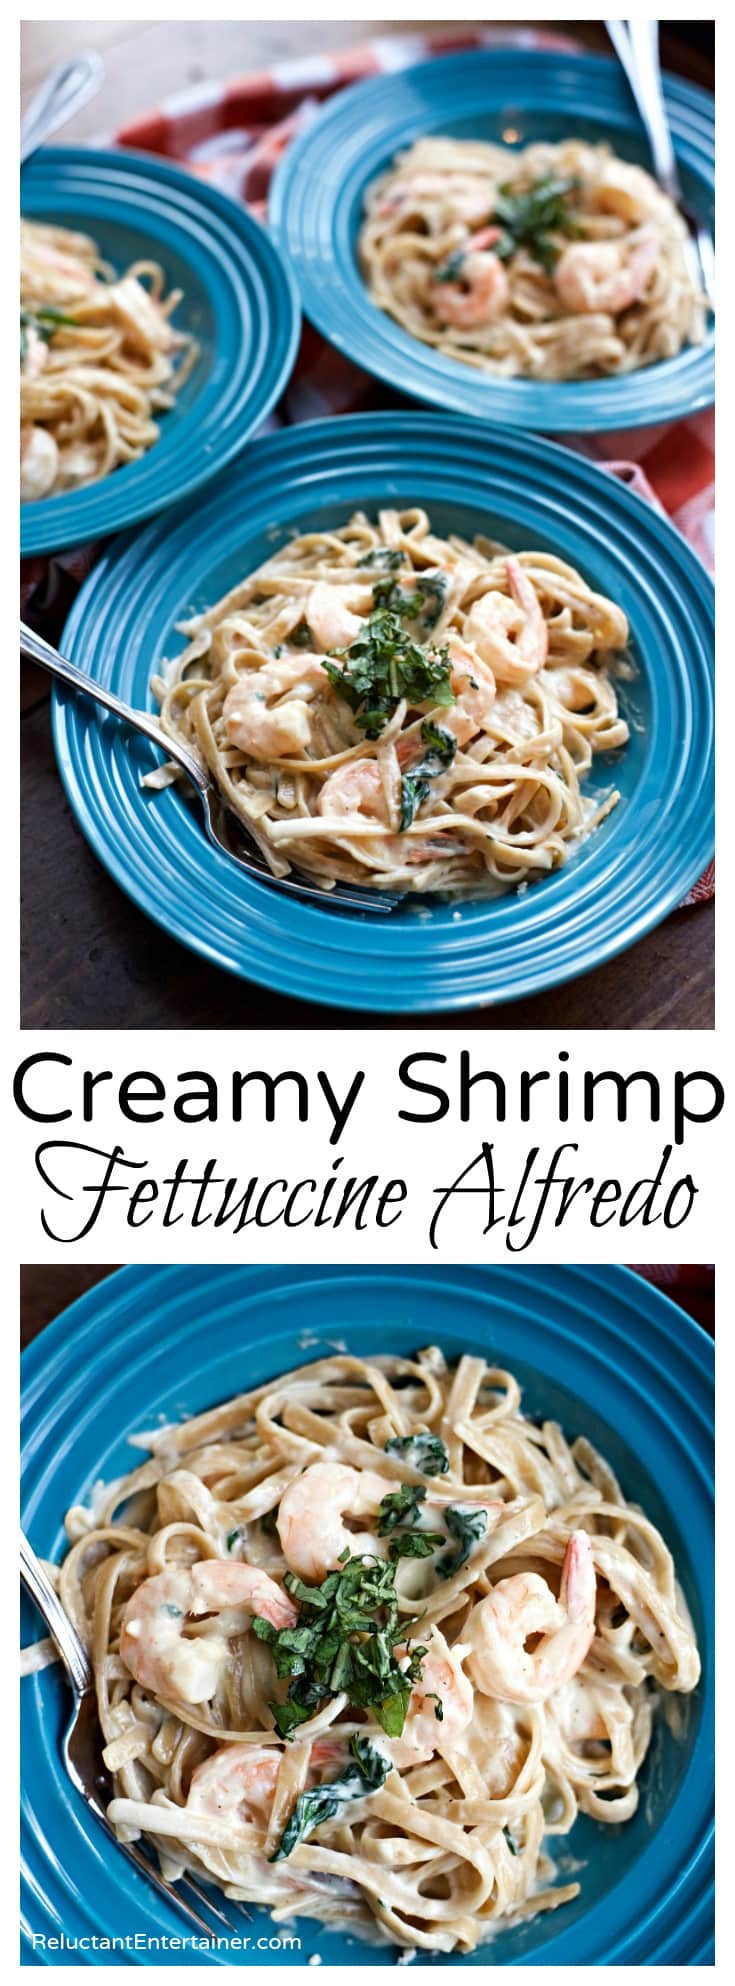 Creamy Shrimp Fettuccine Alfredo